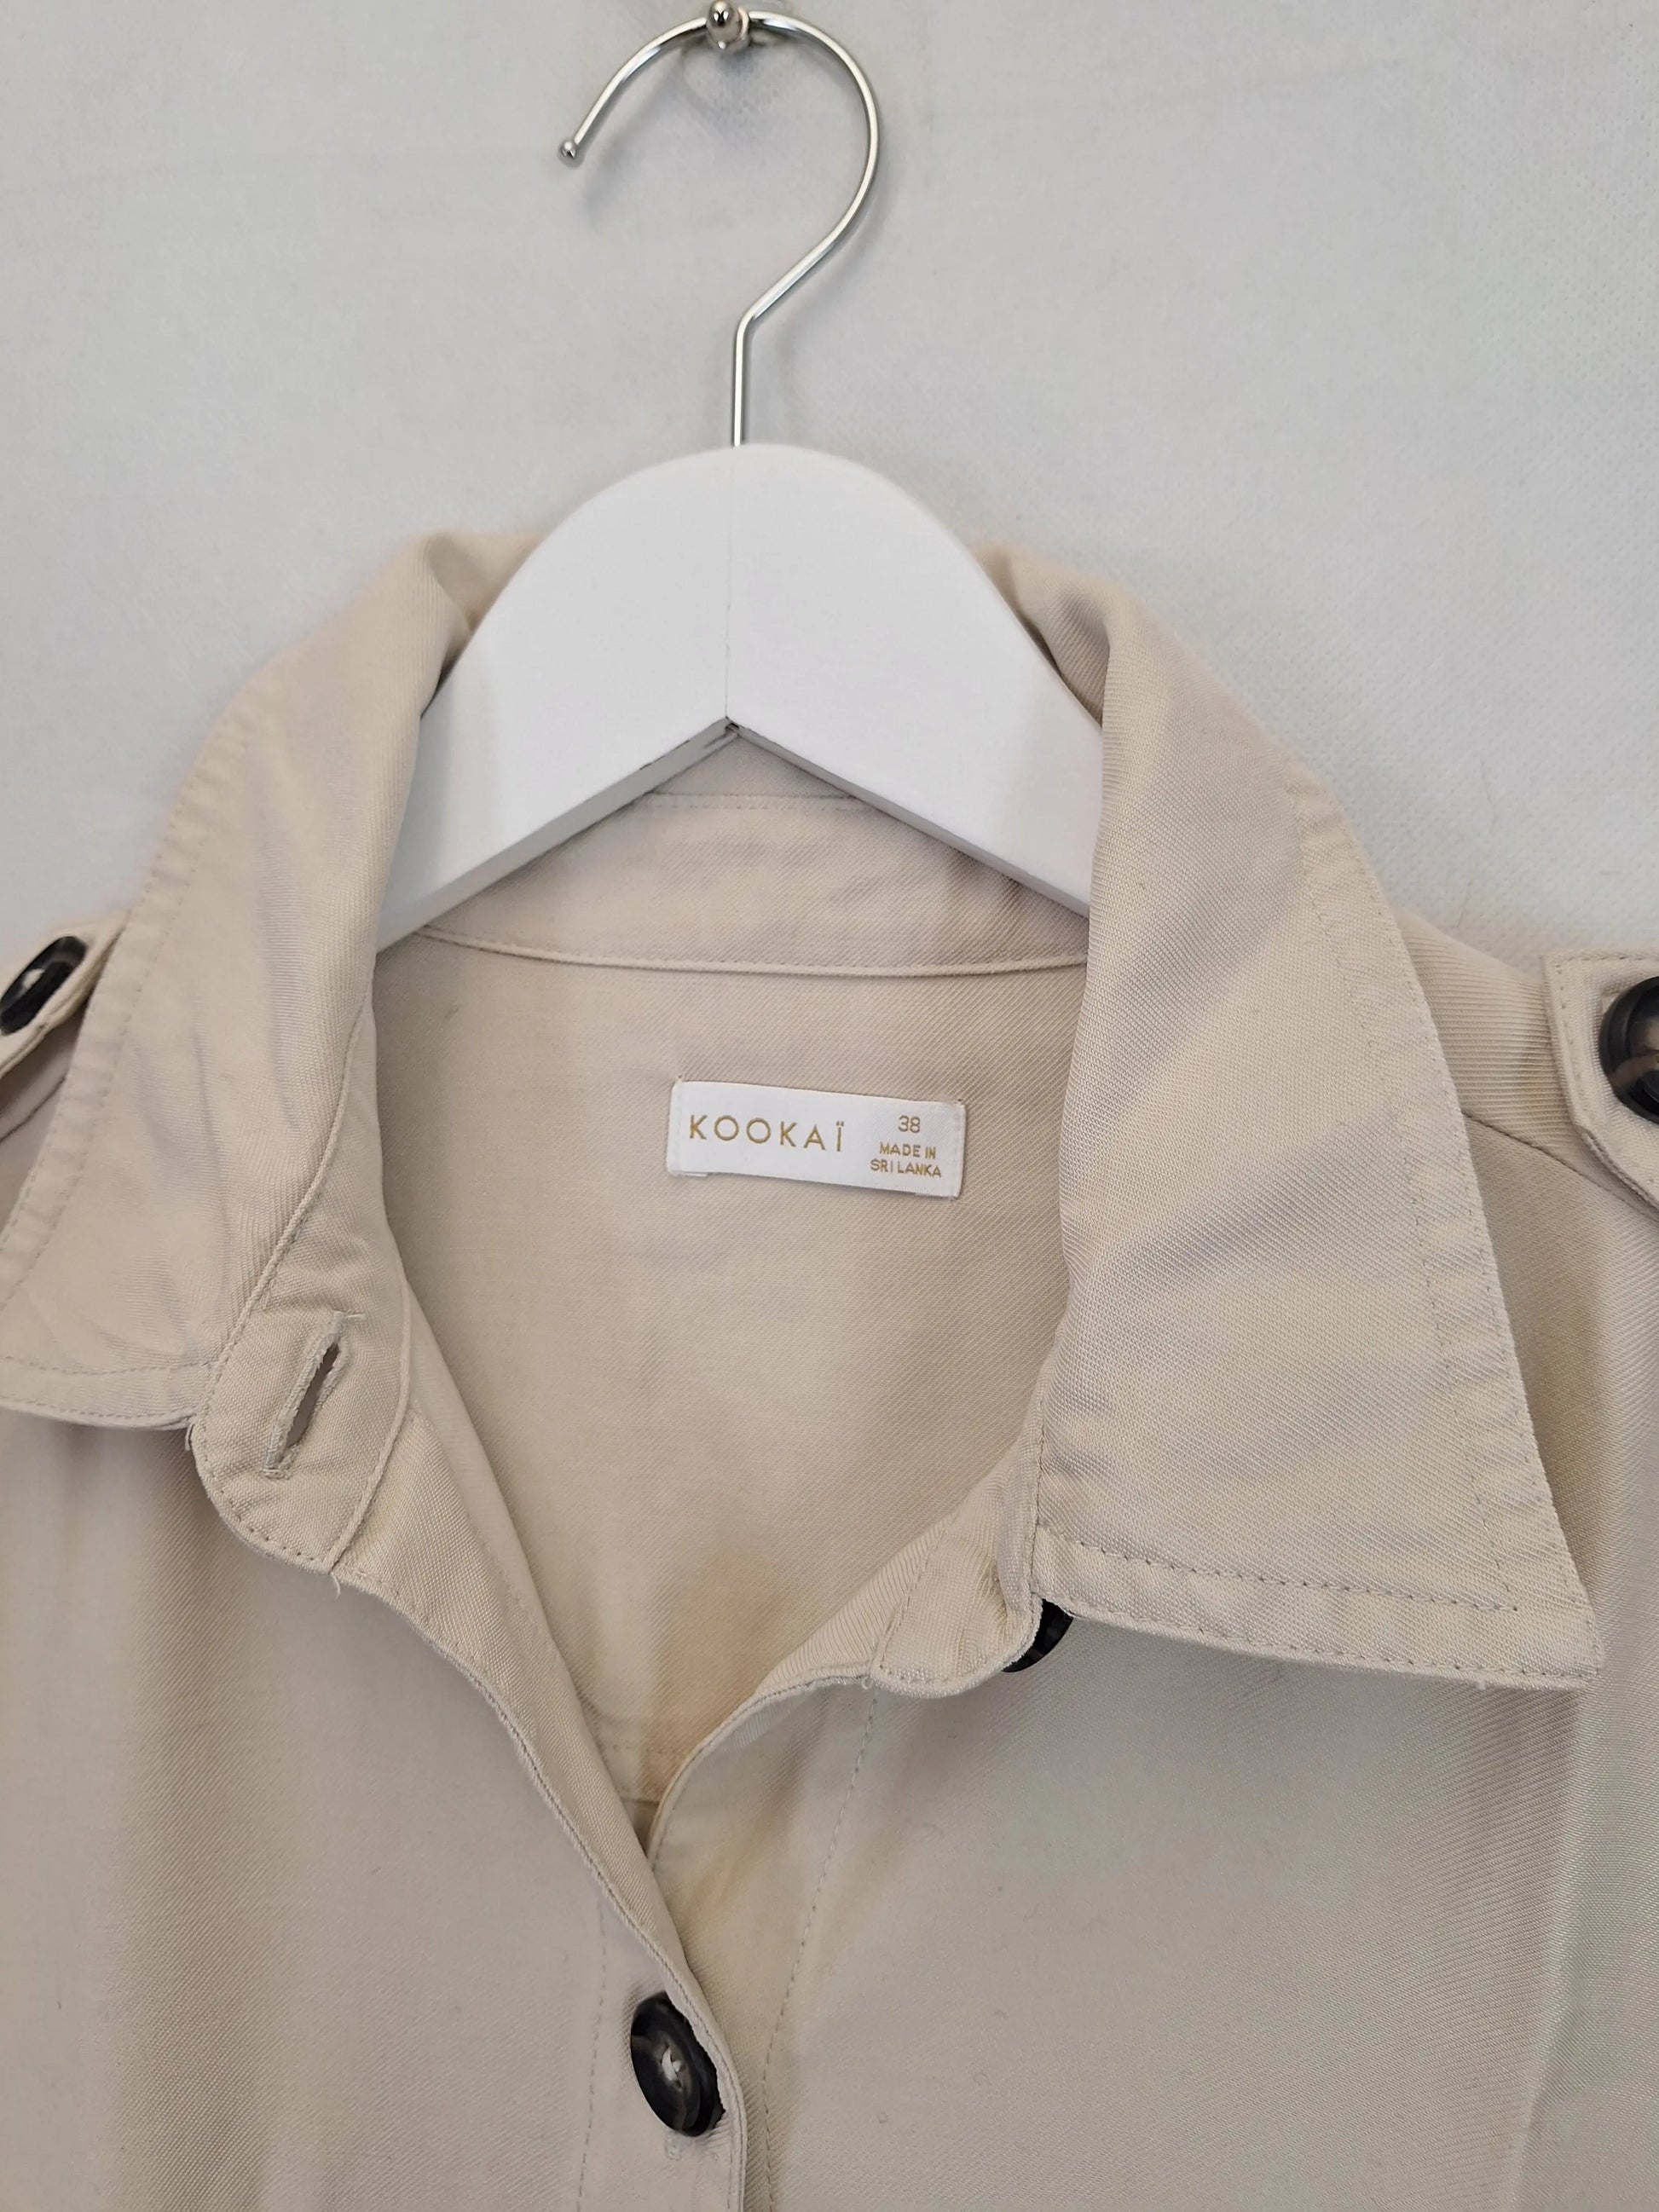 Kookai Safari Jacket Size 10 by SwapUp-Online Second Hand Store-Online Thrift Store